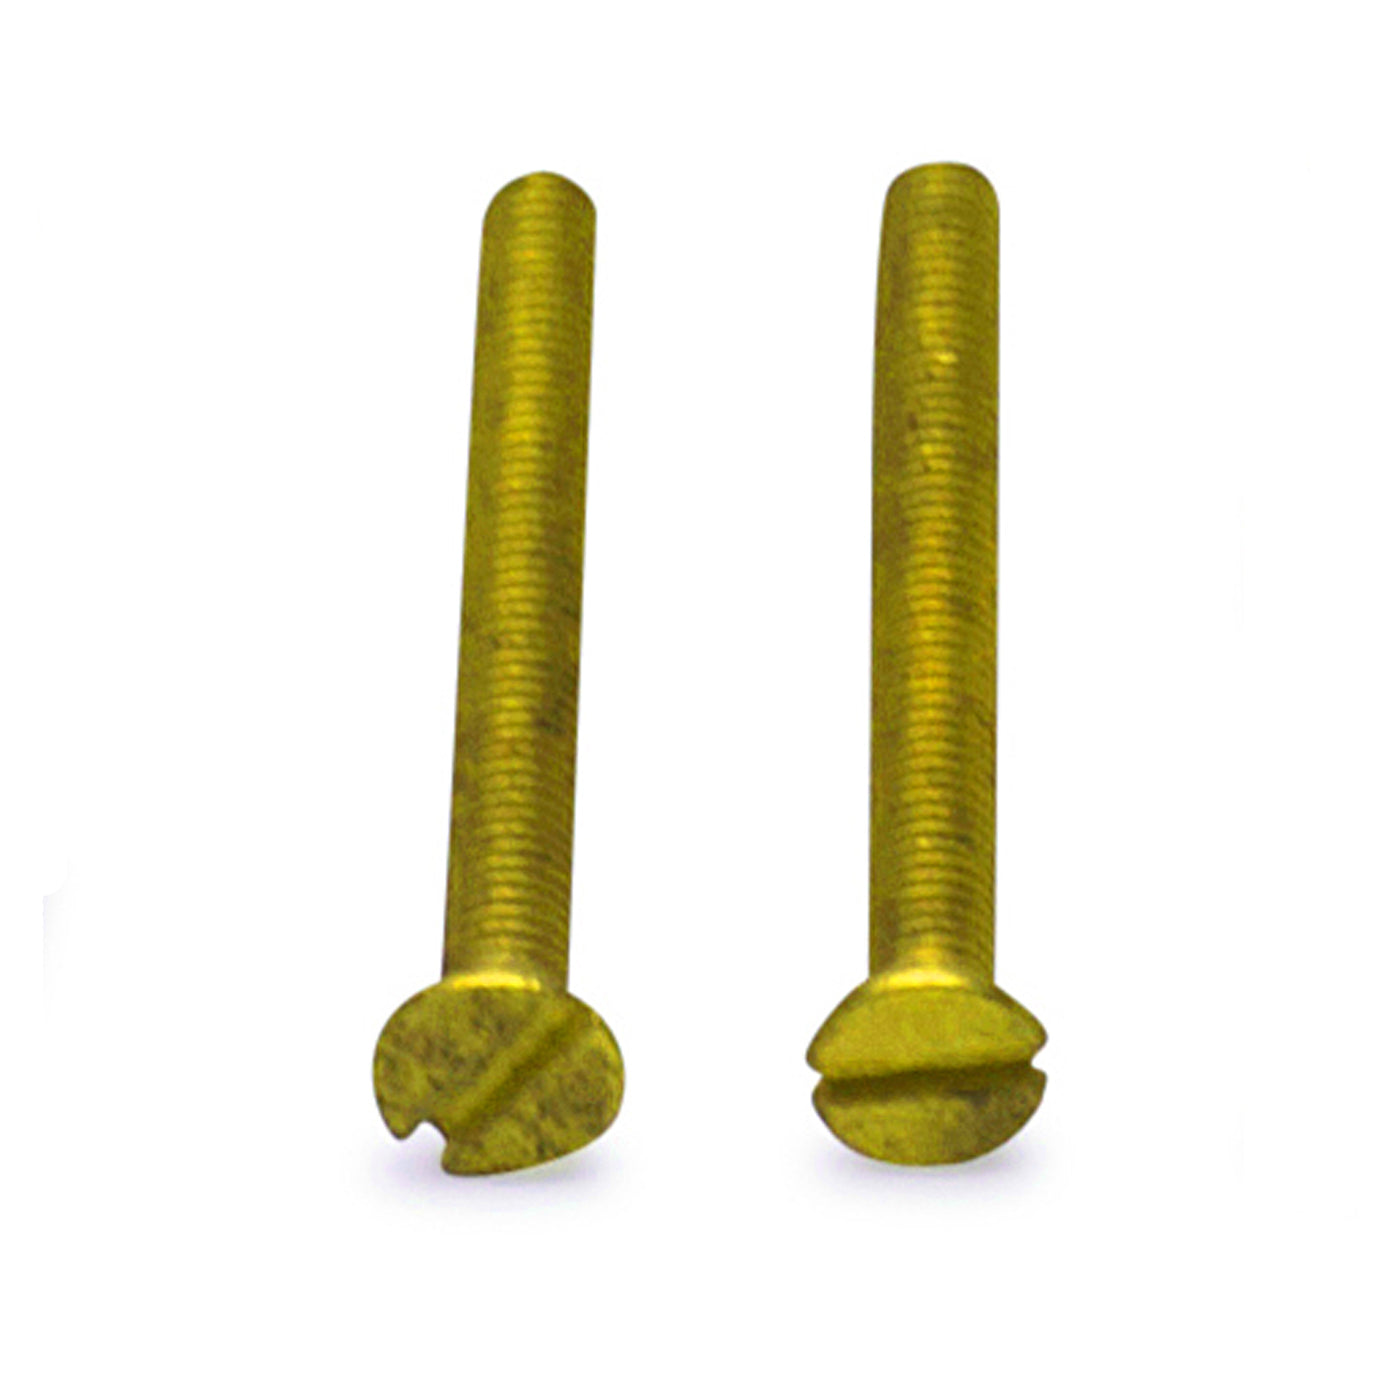 Pair of Standard Rosette Screws (Polished Brass)